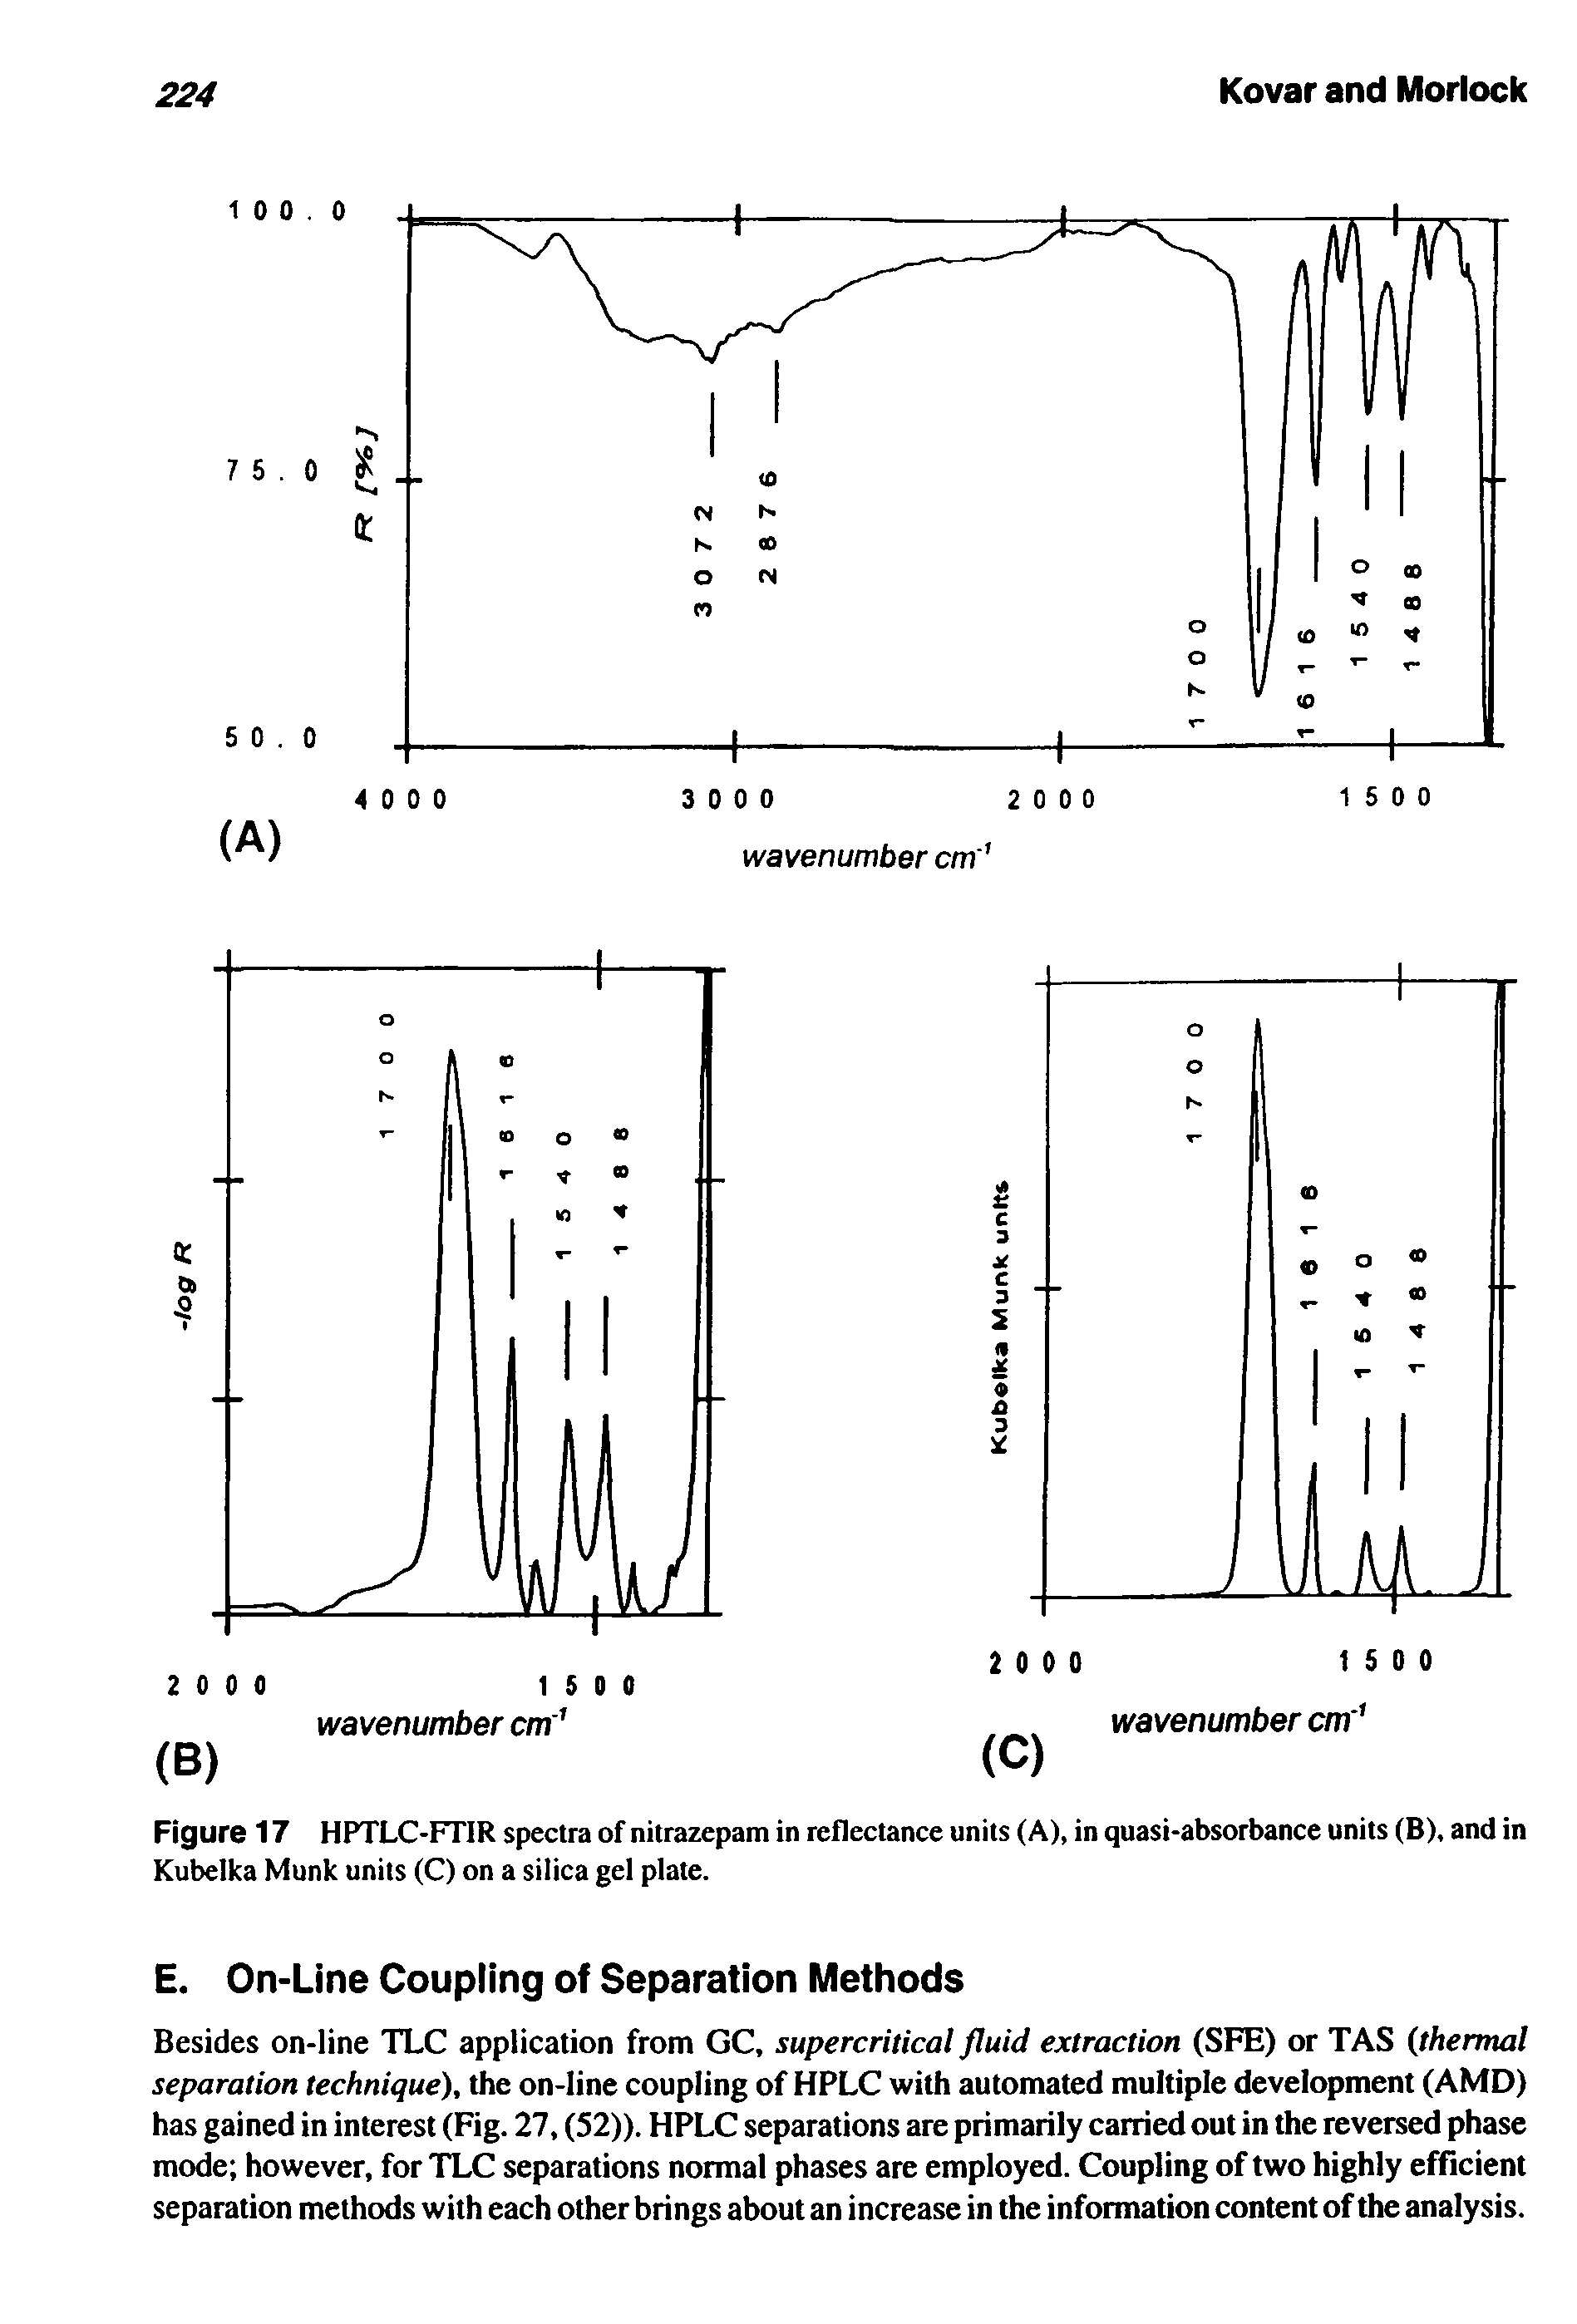 Figure 17 HPTLC-FTIR spectra of nitrazepam in reflectance units (A), in quasi-absorbance units (B), and in Kubelka Munk units (C) on a silica gel plate.